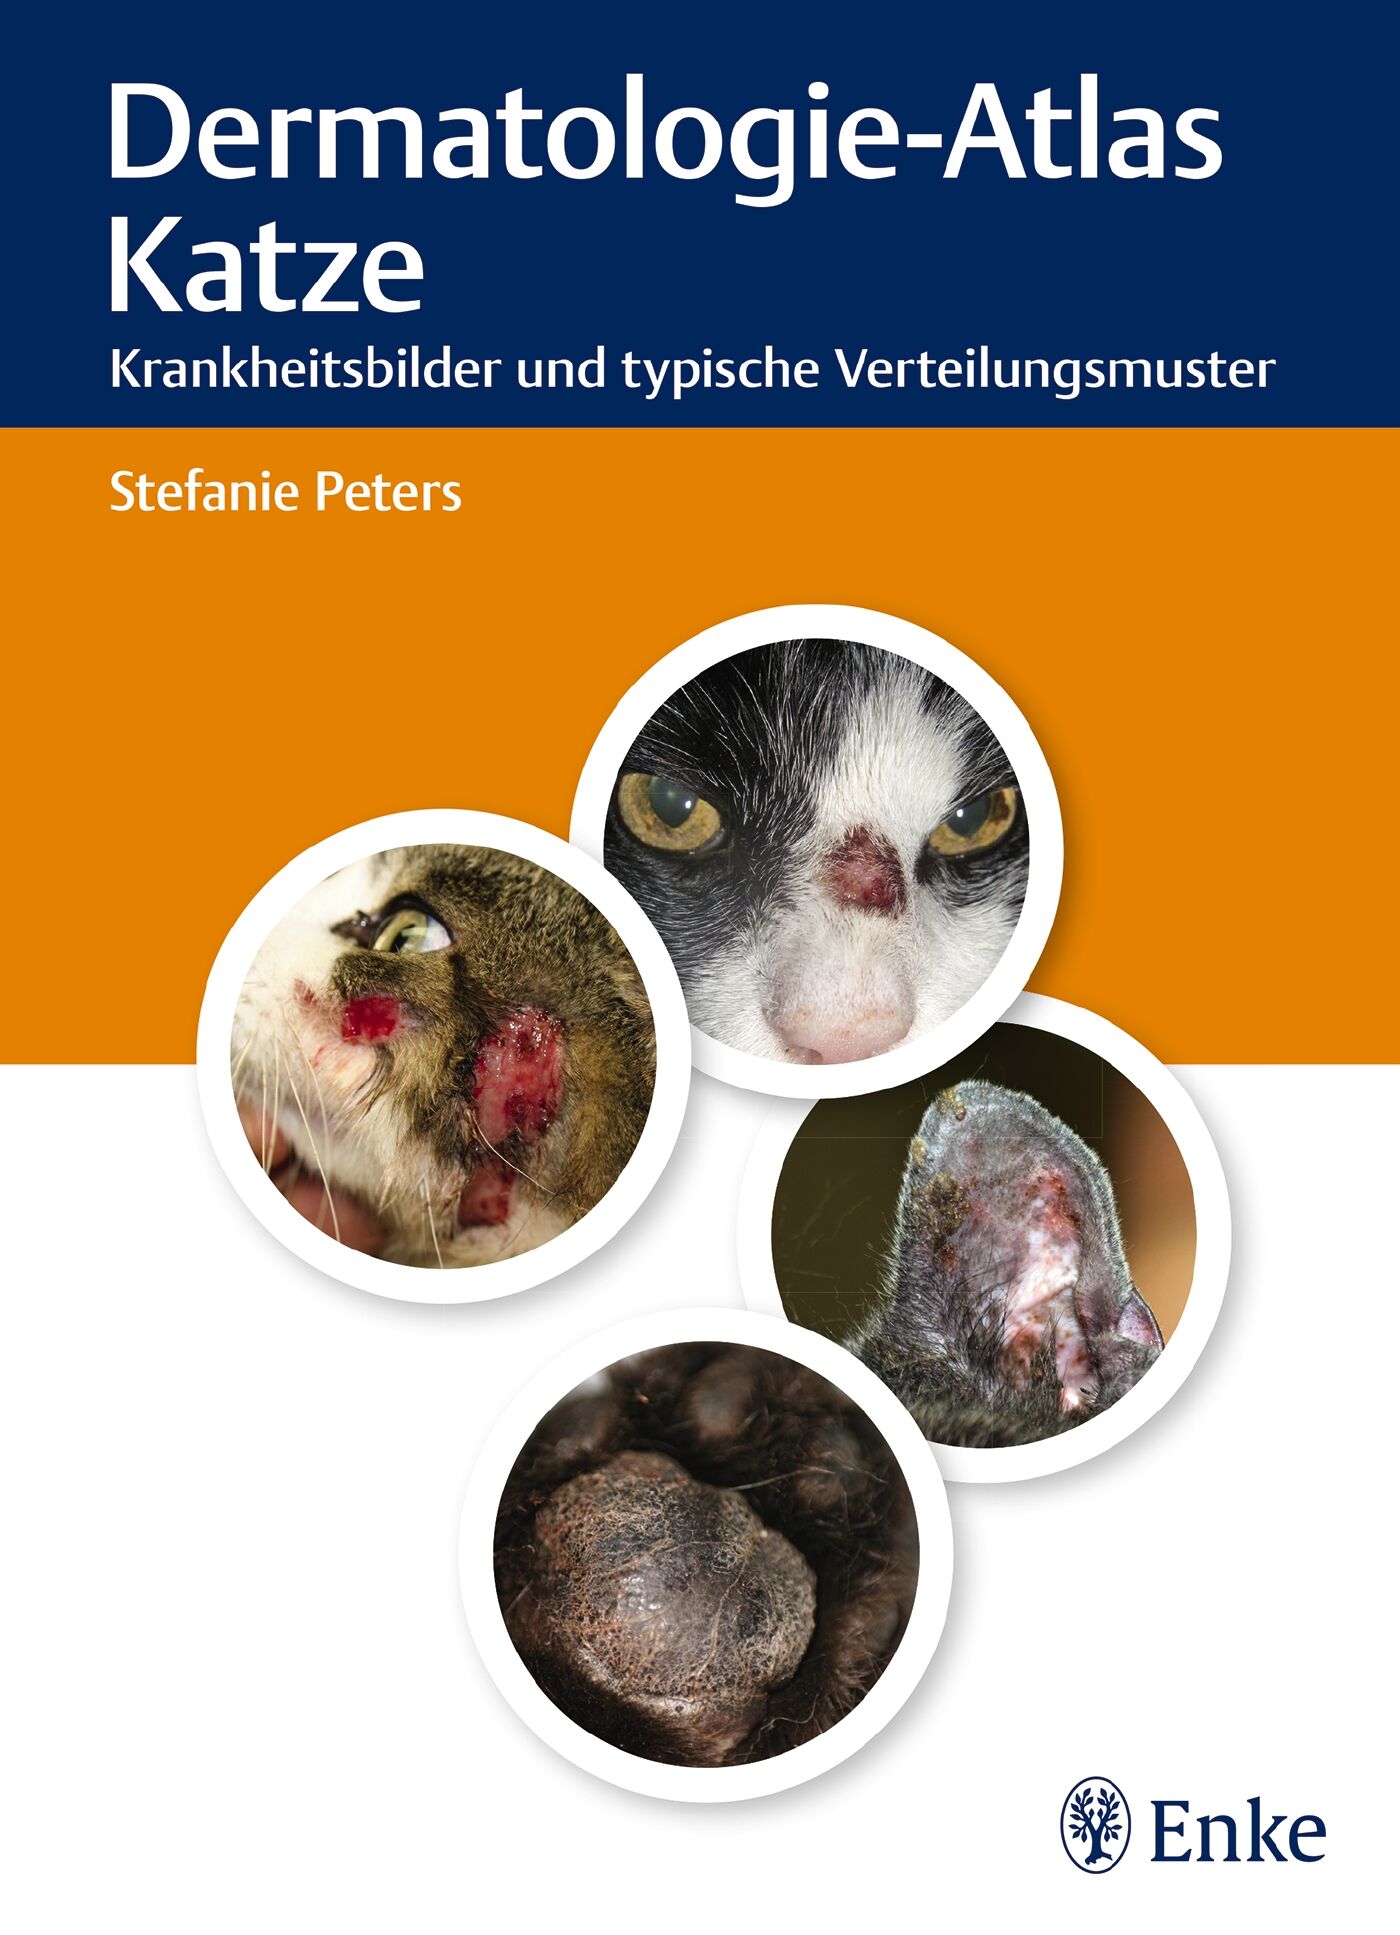 Dermatologie-Atlas Katze, 9783132194311